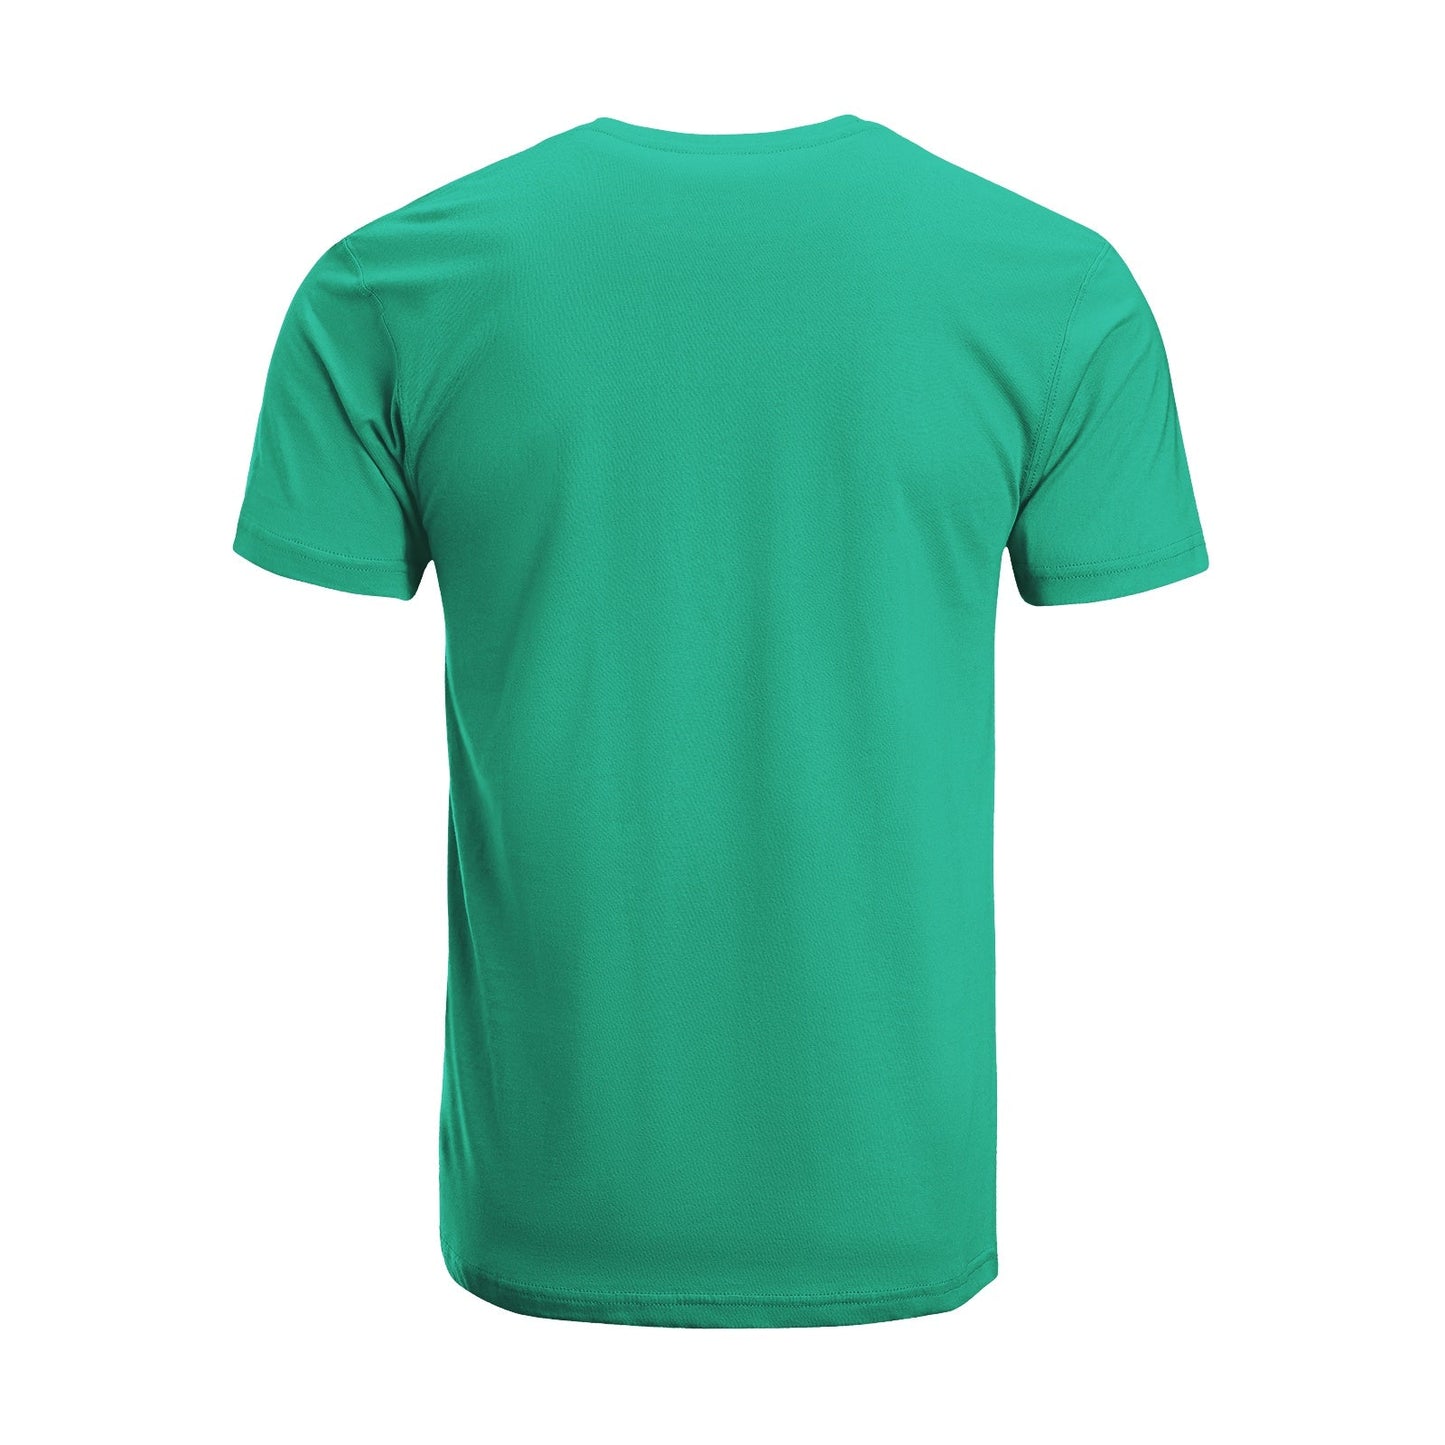 Unisex Short Sleeve Crew Neck Cotton Jersey T-Shirt DOG 04 - Tara-Outfits.com